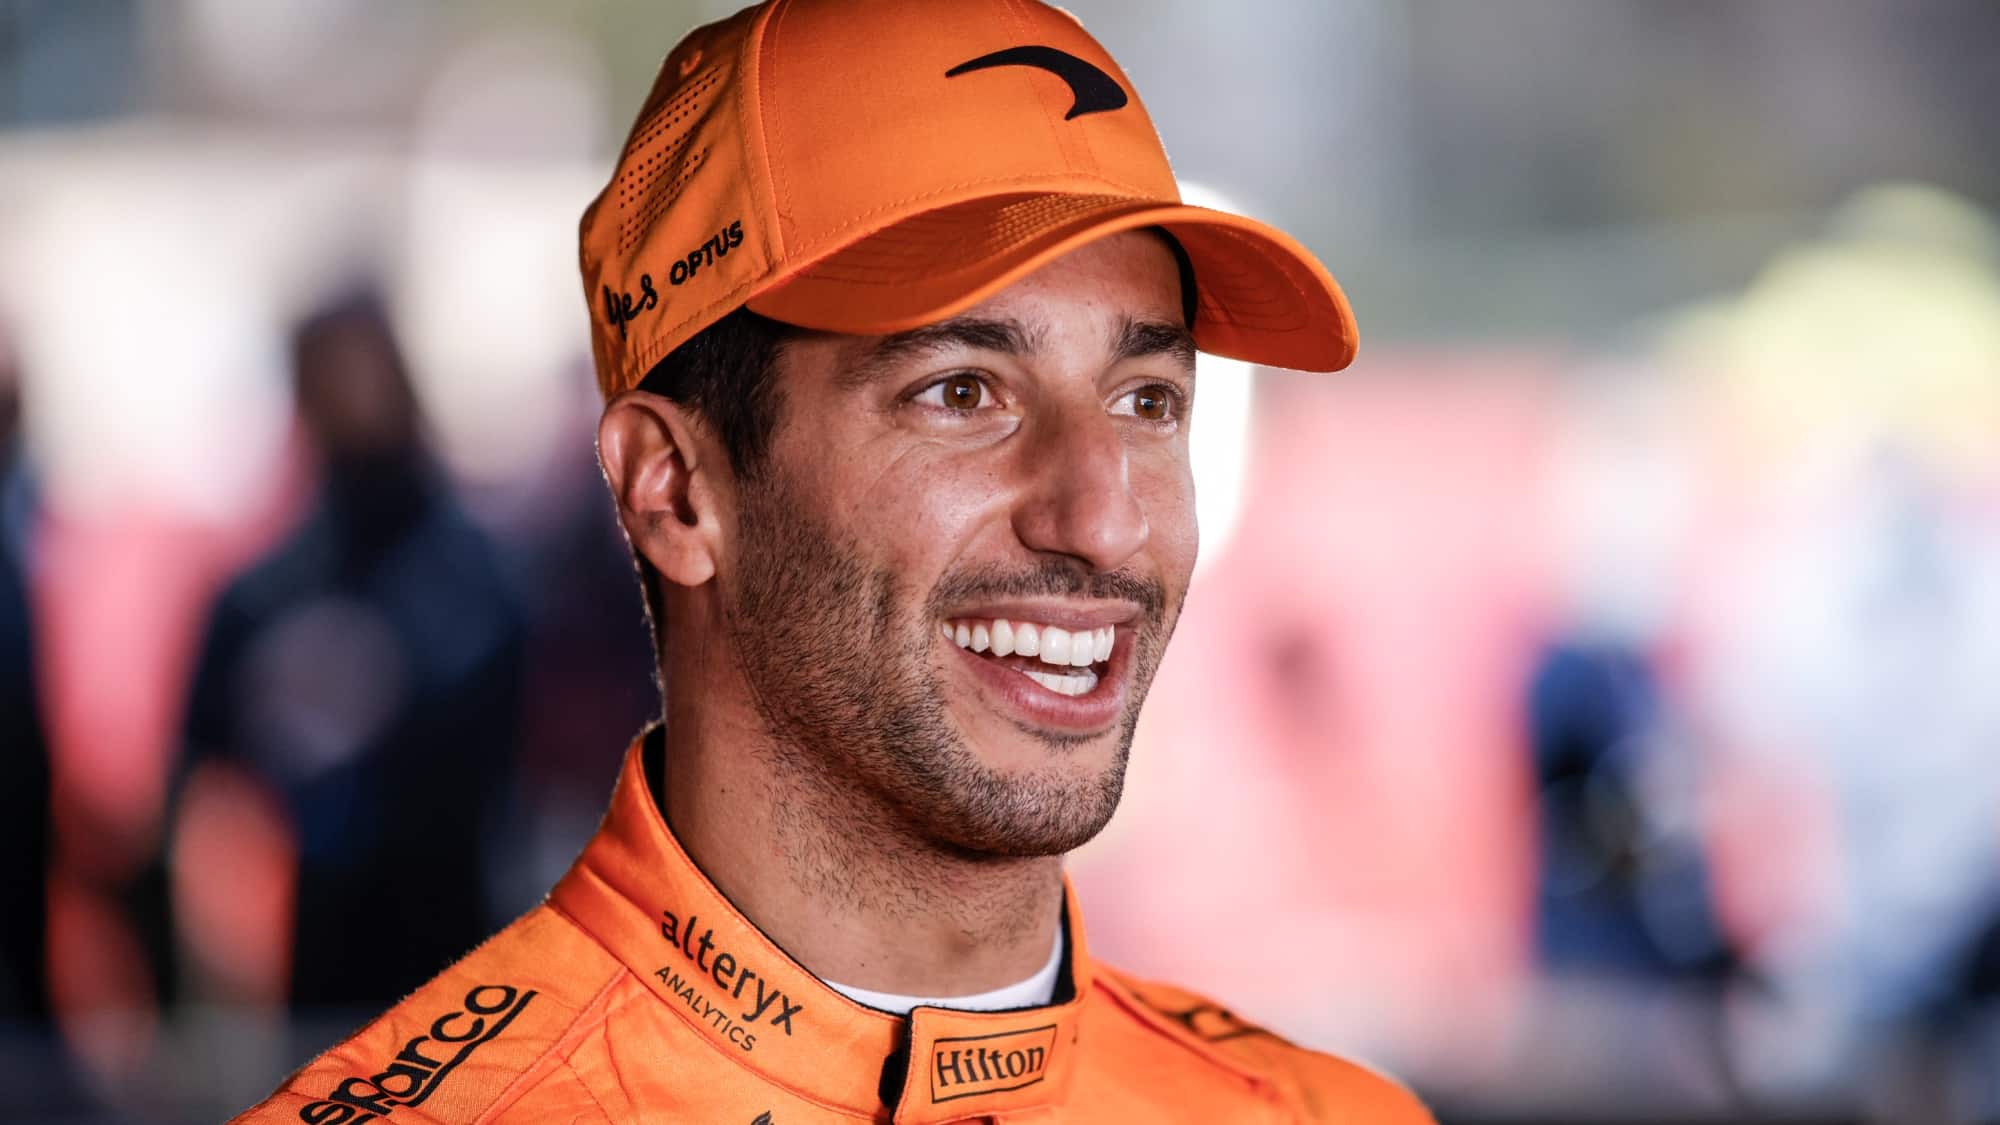 Ricciardo will race in Bahrain GP after negative Covid test - Motor ...